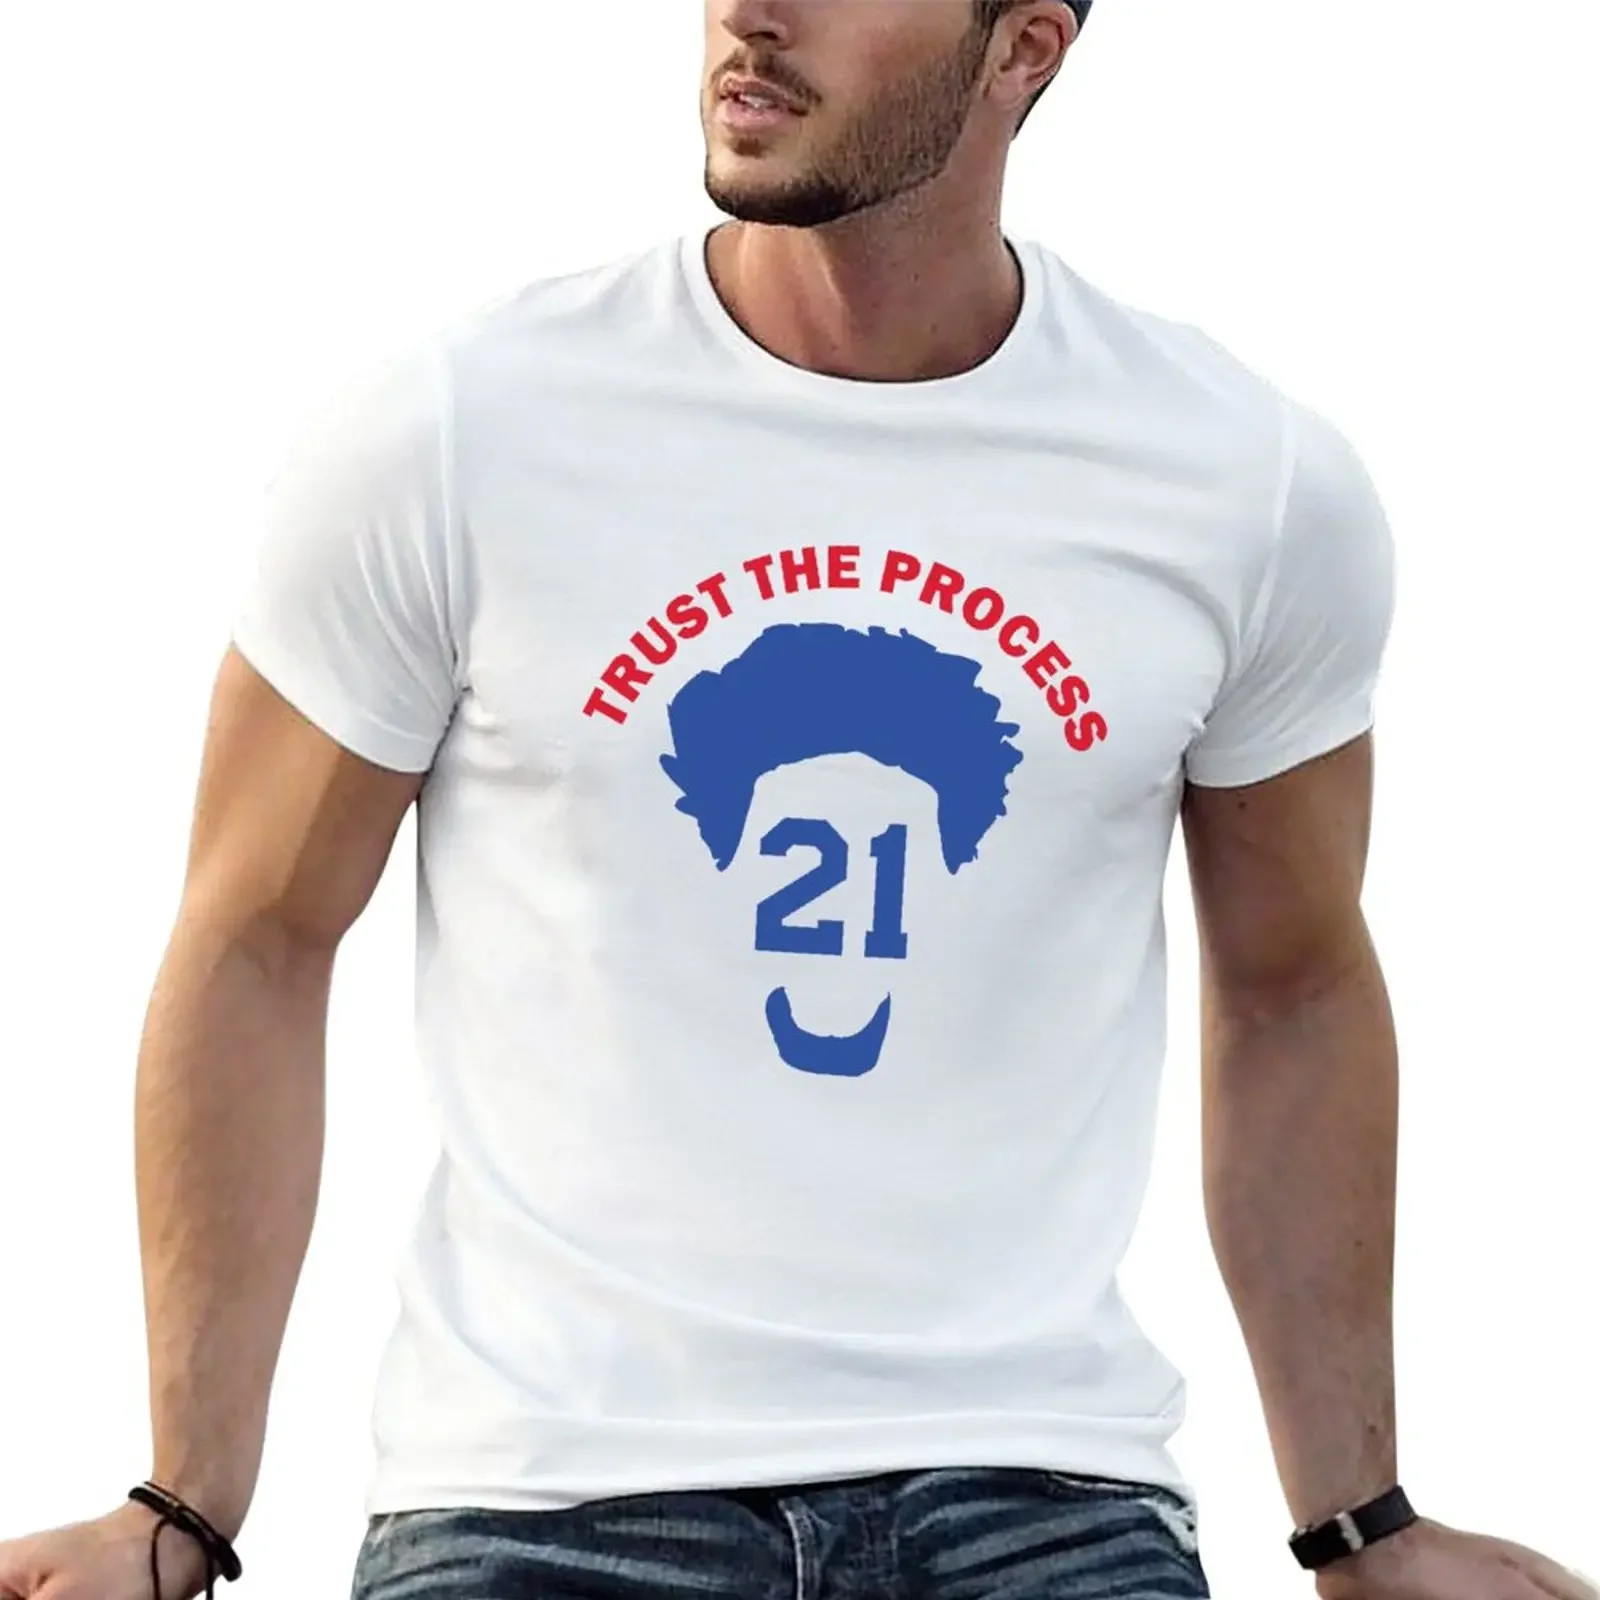 

Trust The Process #21 Design T-Shirt boys animal print shirt sublime cute tops Men's cotton t-shirt